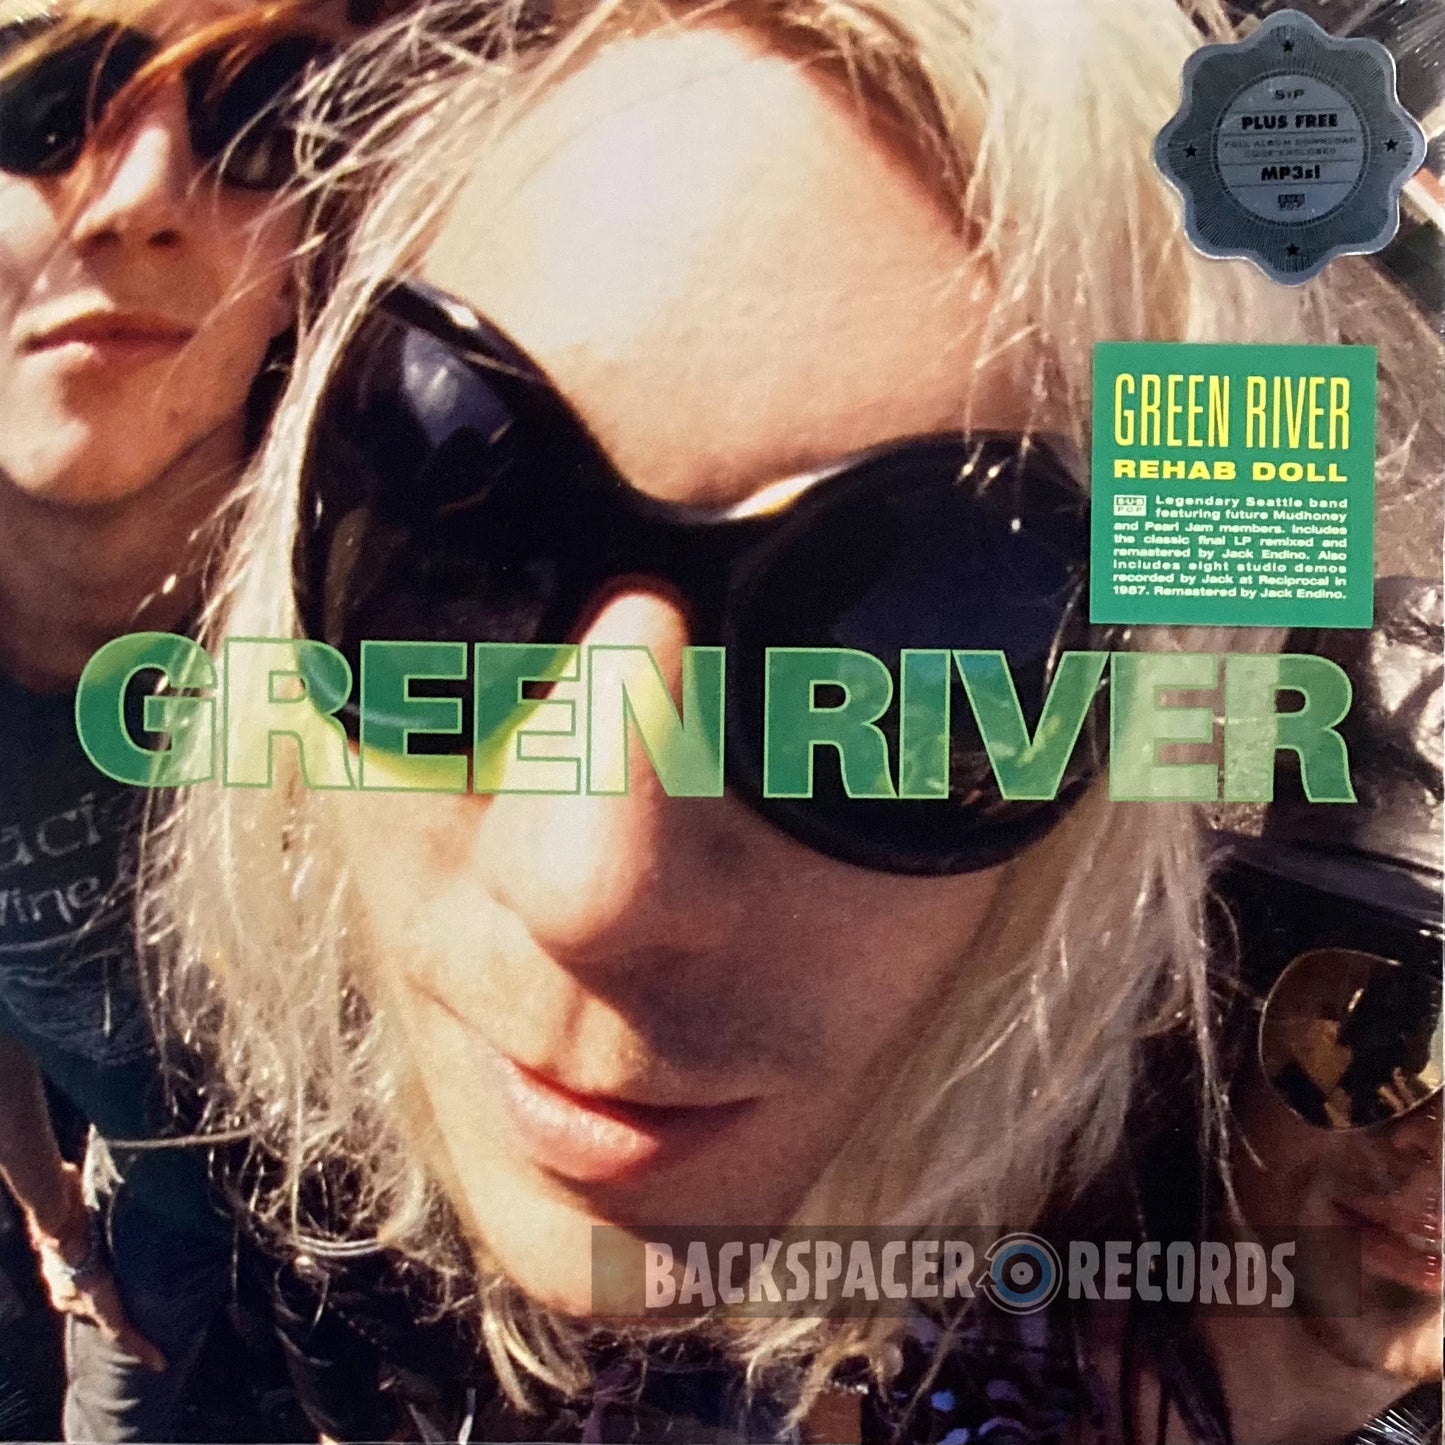 Green River – Rehab Doll 2-LP (Sealed)